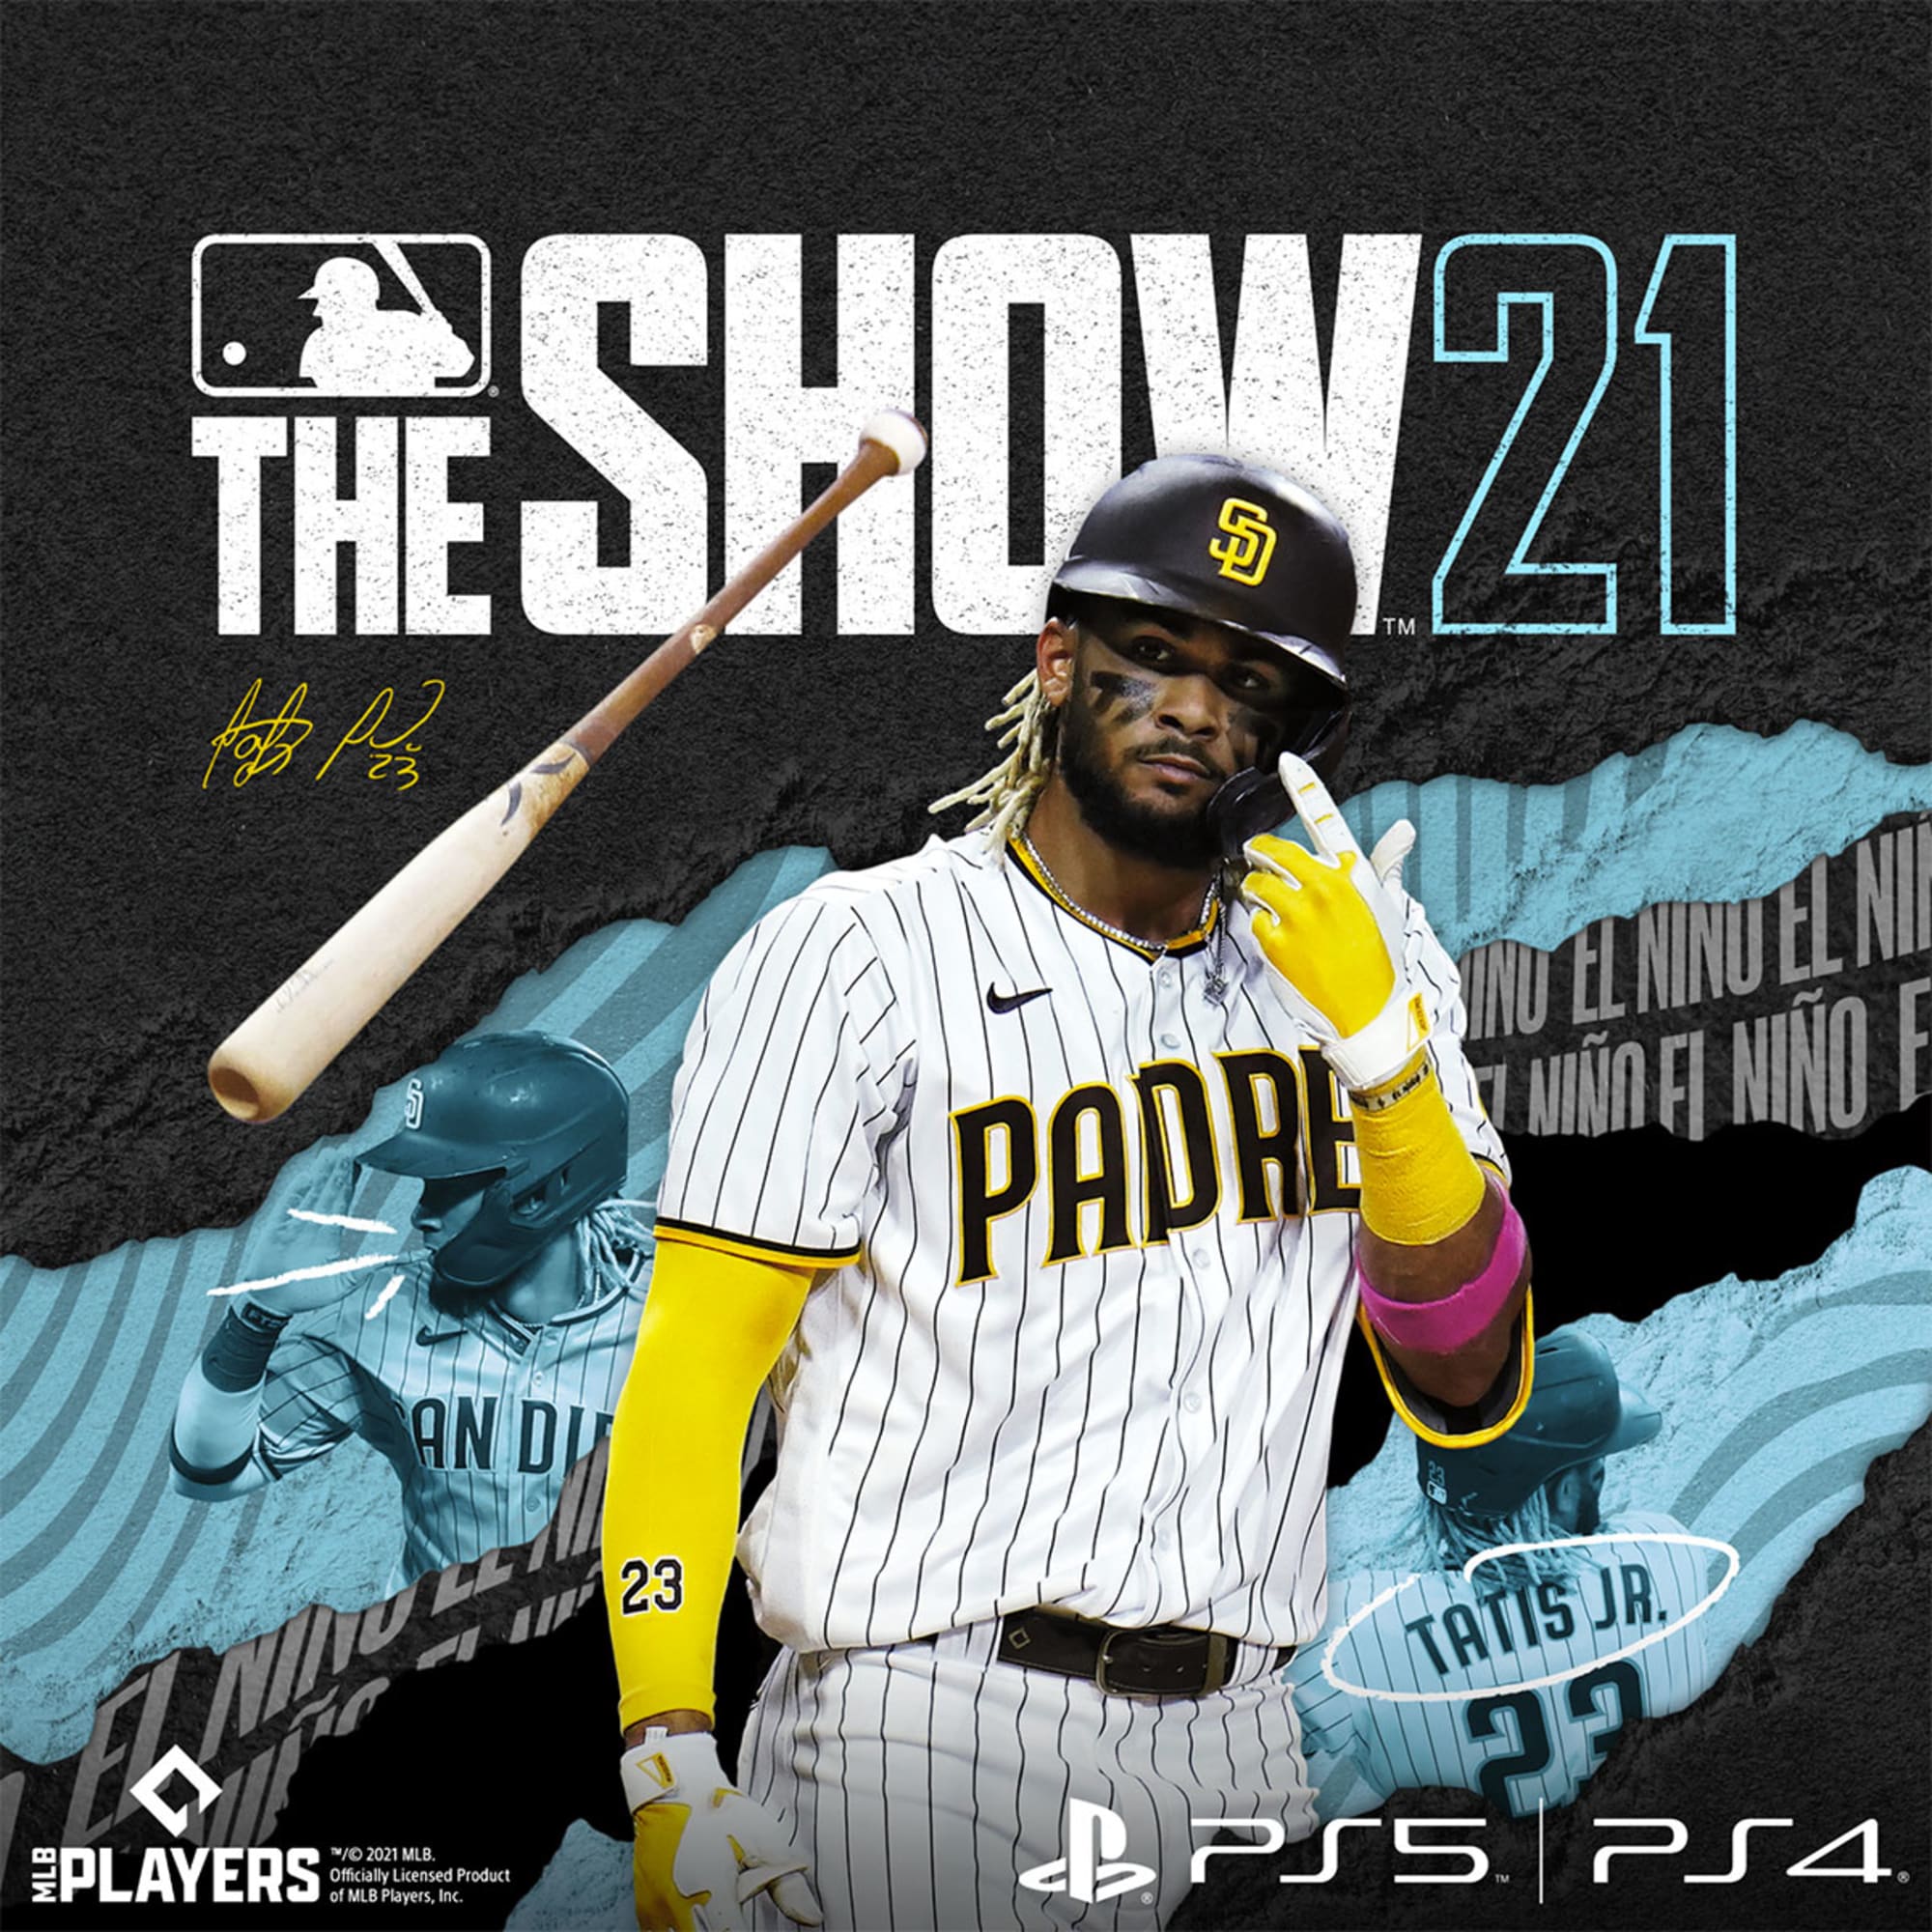 MLB® The Show™ - MLB® The Show™ 23 Celebrates Fernando “El Toro